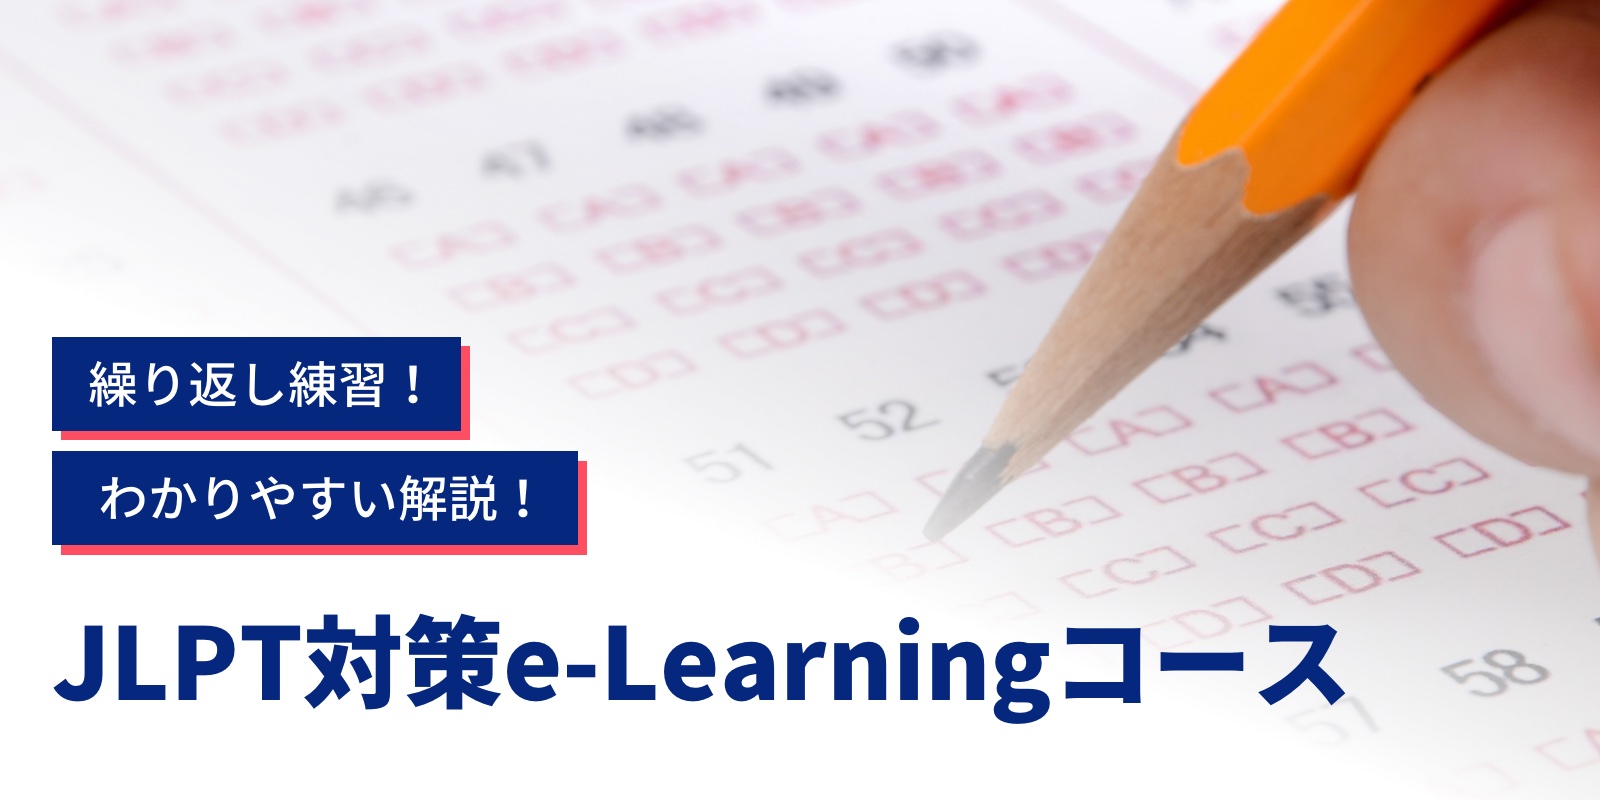 JLPT measures E-Learning course